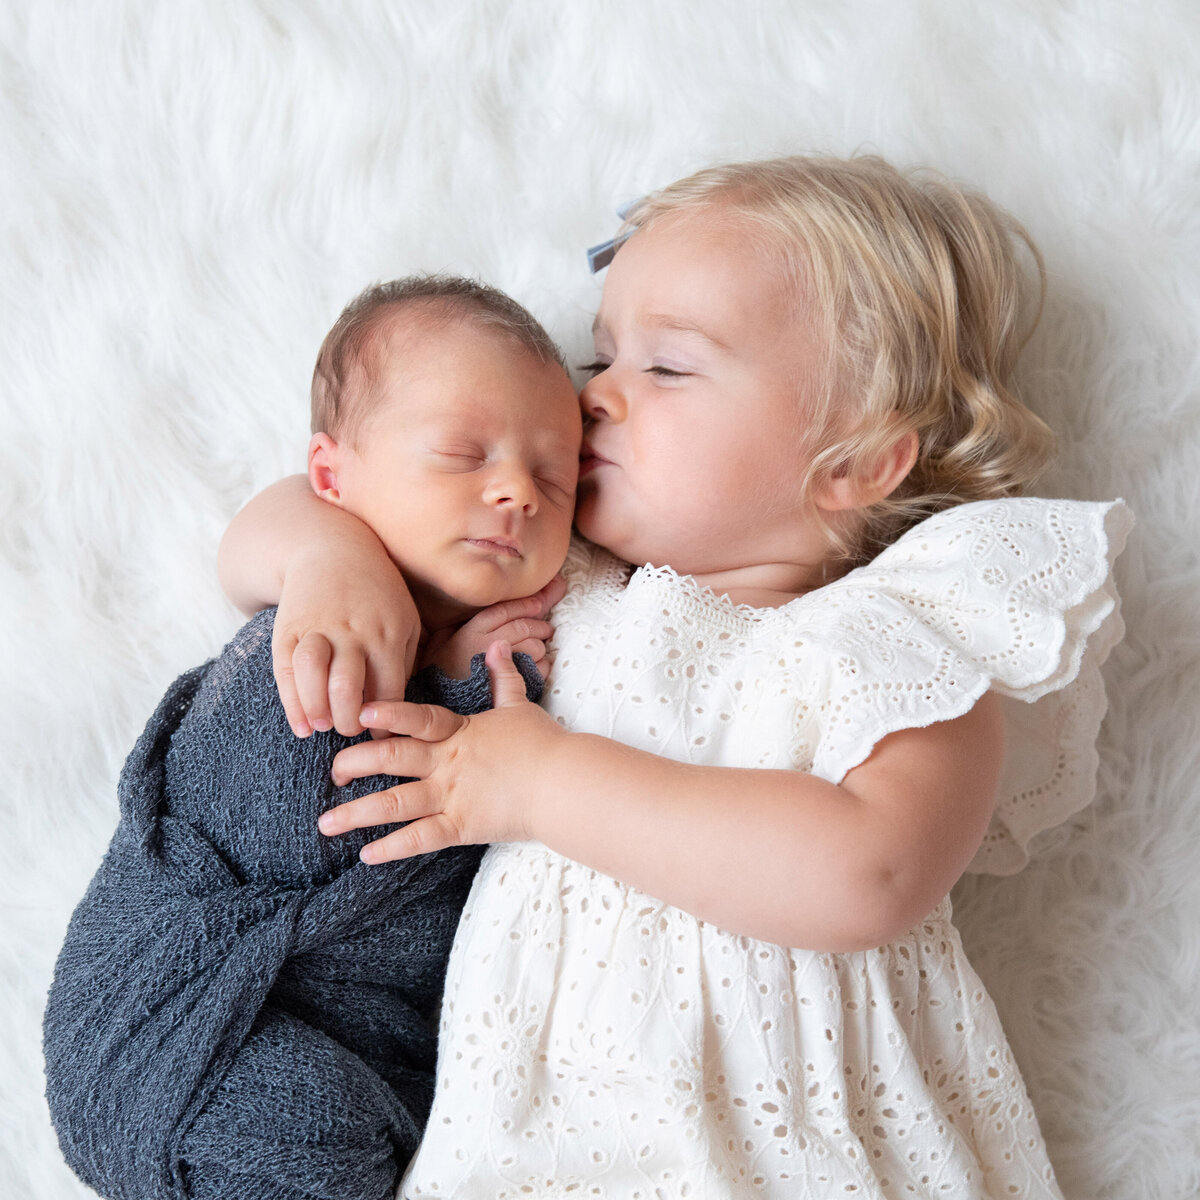 sibiling-kissing-newborn-on-head